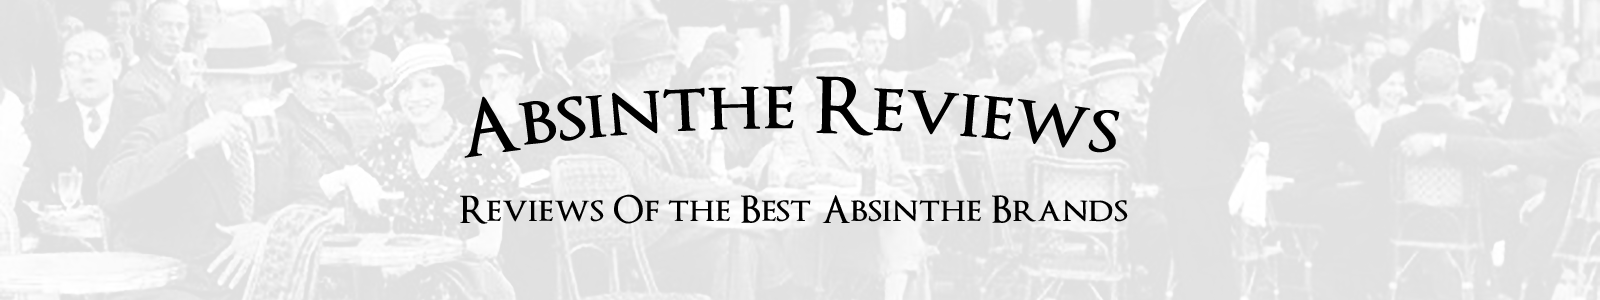 Absinthes Reviews